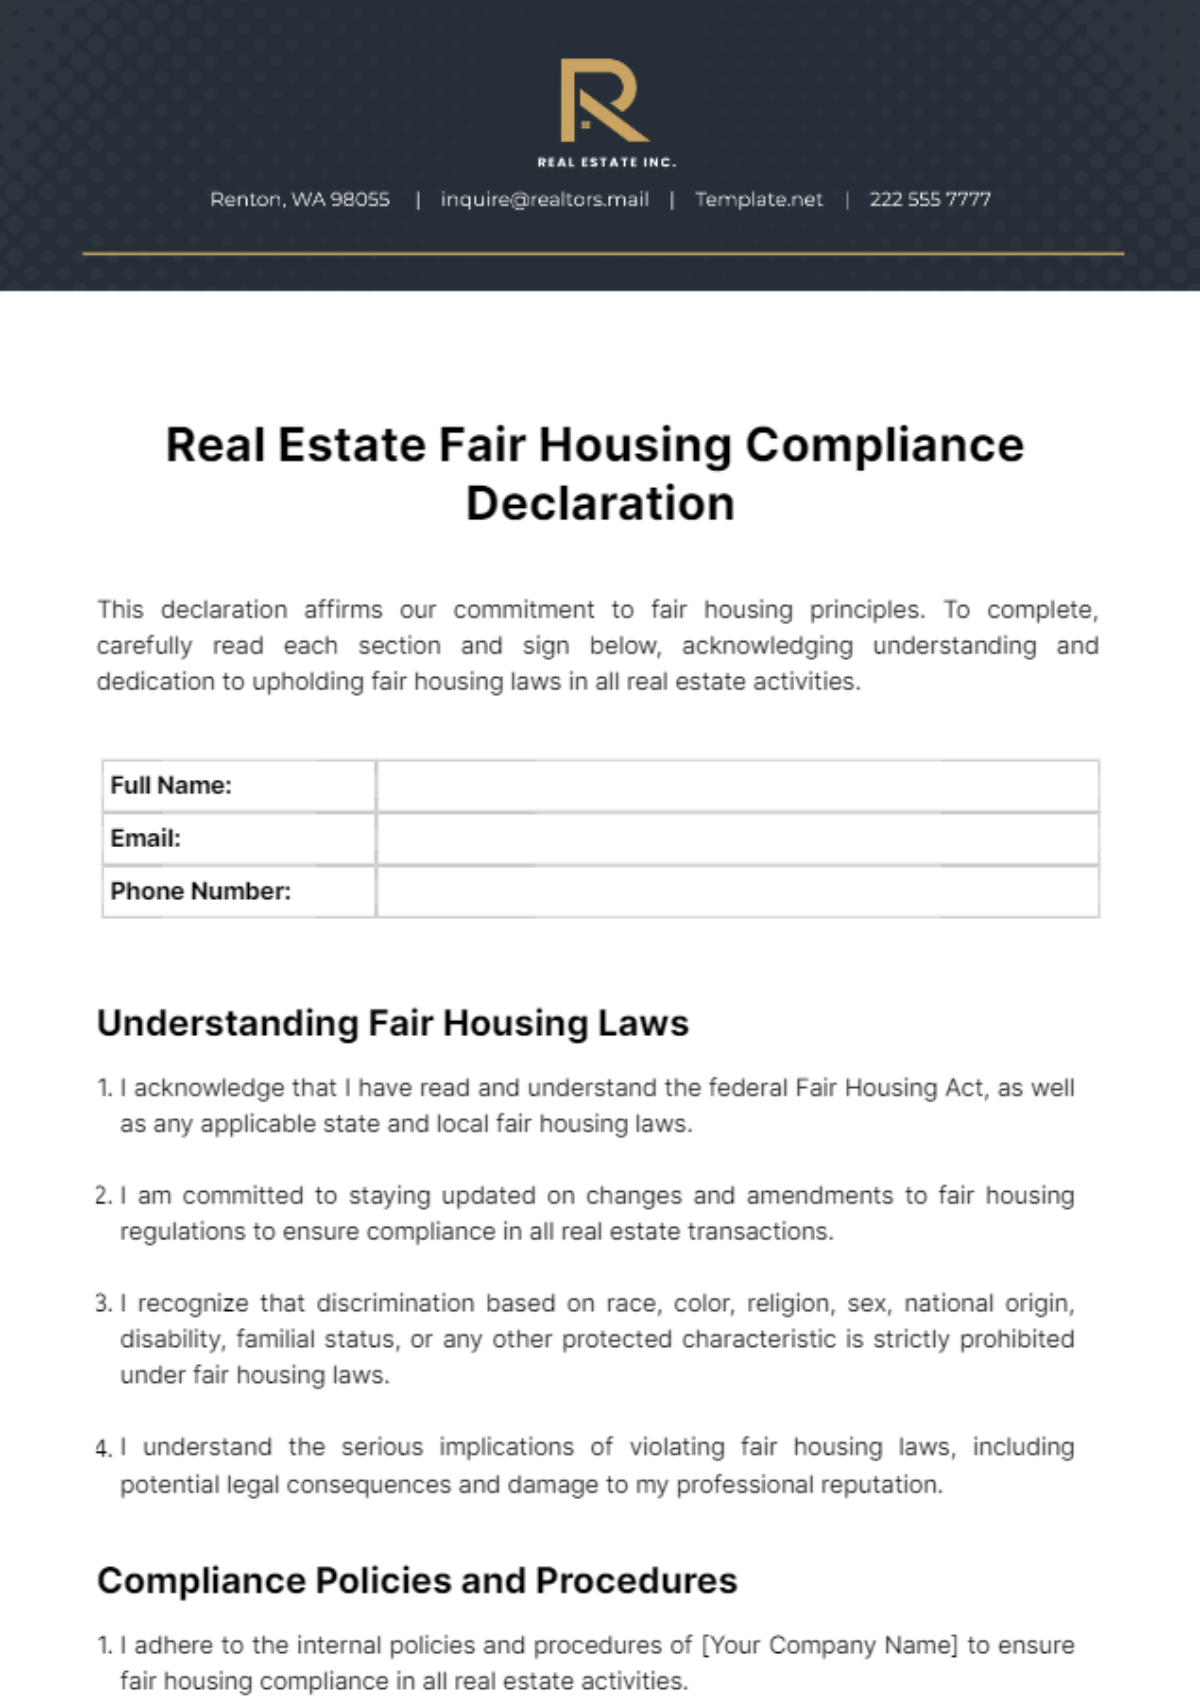 Real Estate Fair Housing Compliance Declaration Template